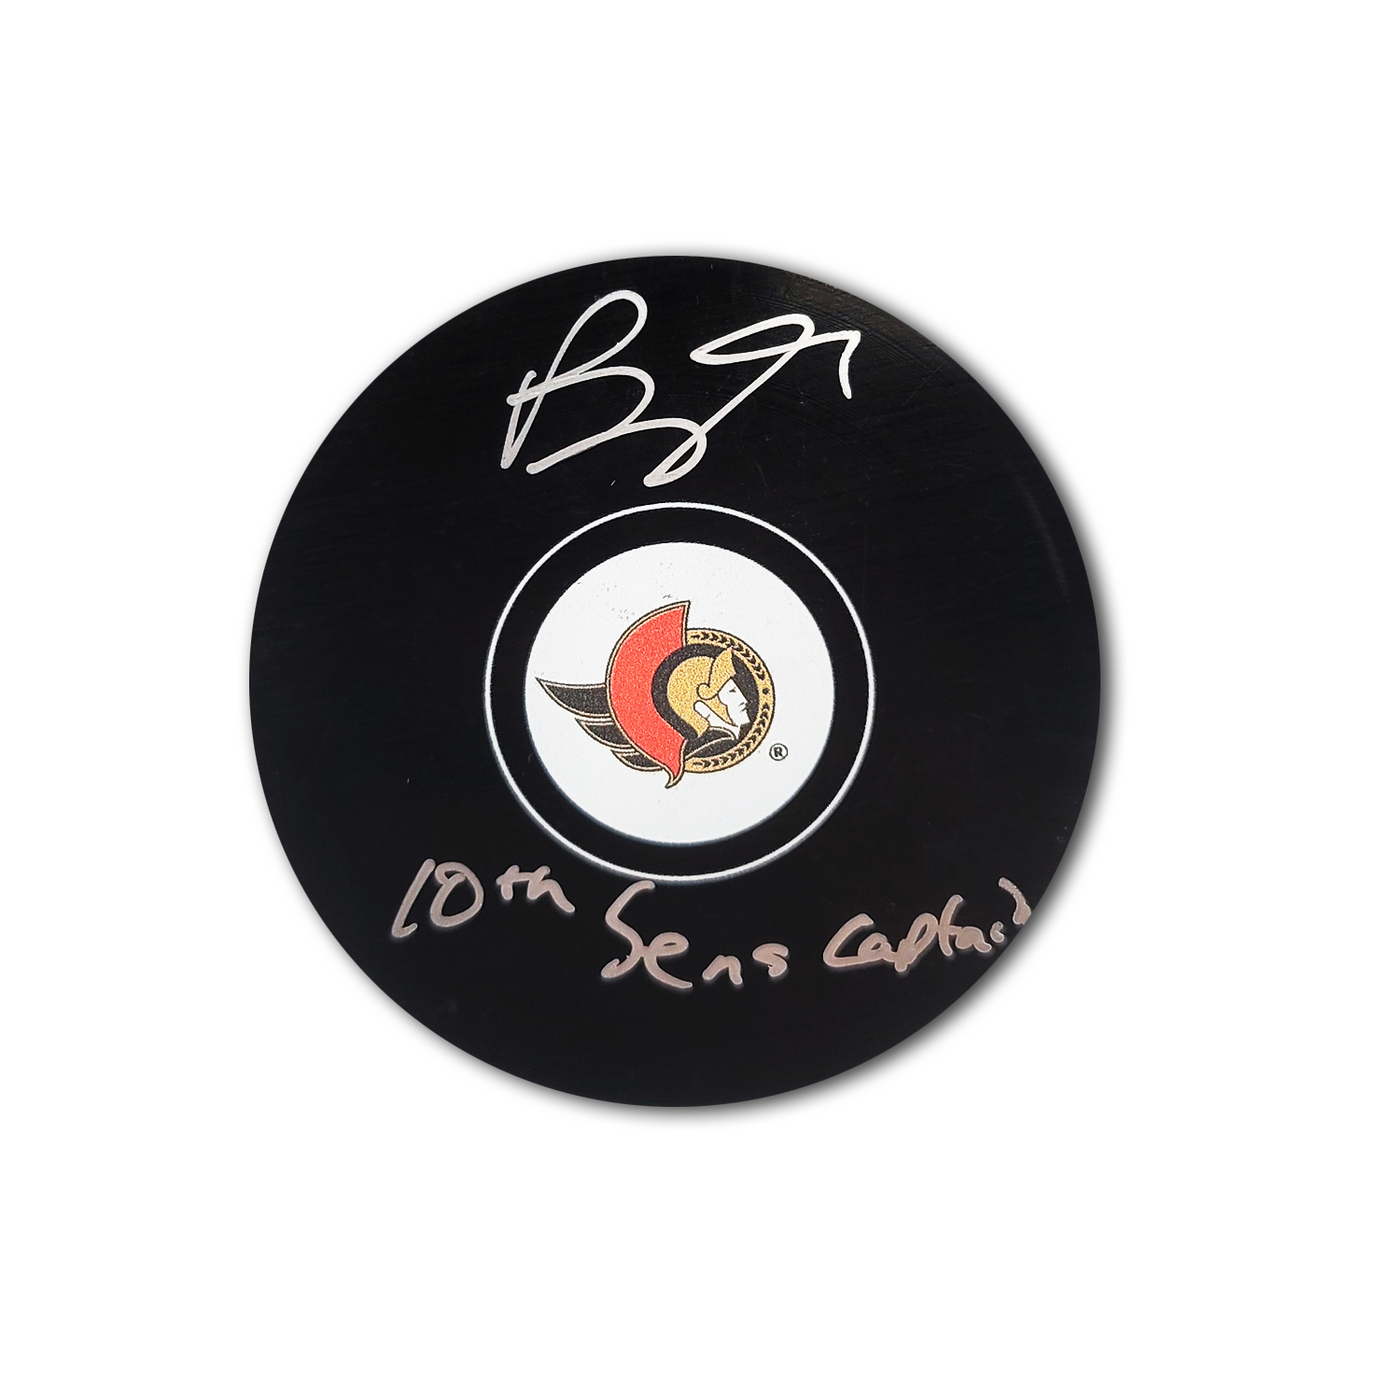 Brady Tkachuk Ottawa Senators Autographed Hockey Puck Inscribed 10th Sens Captain